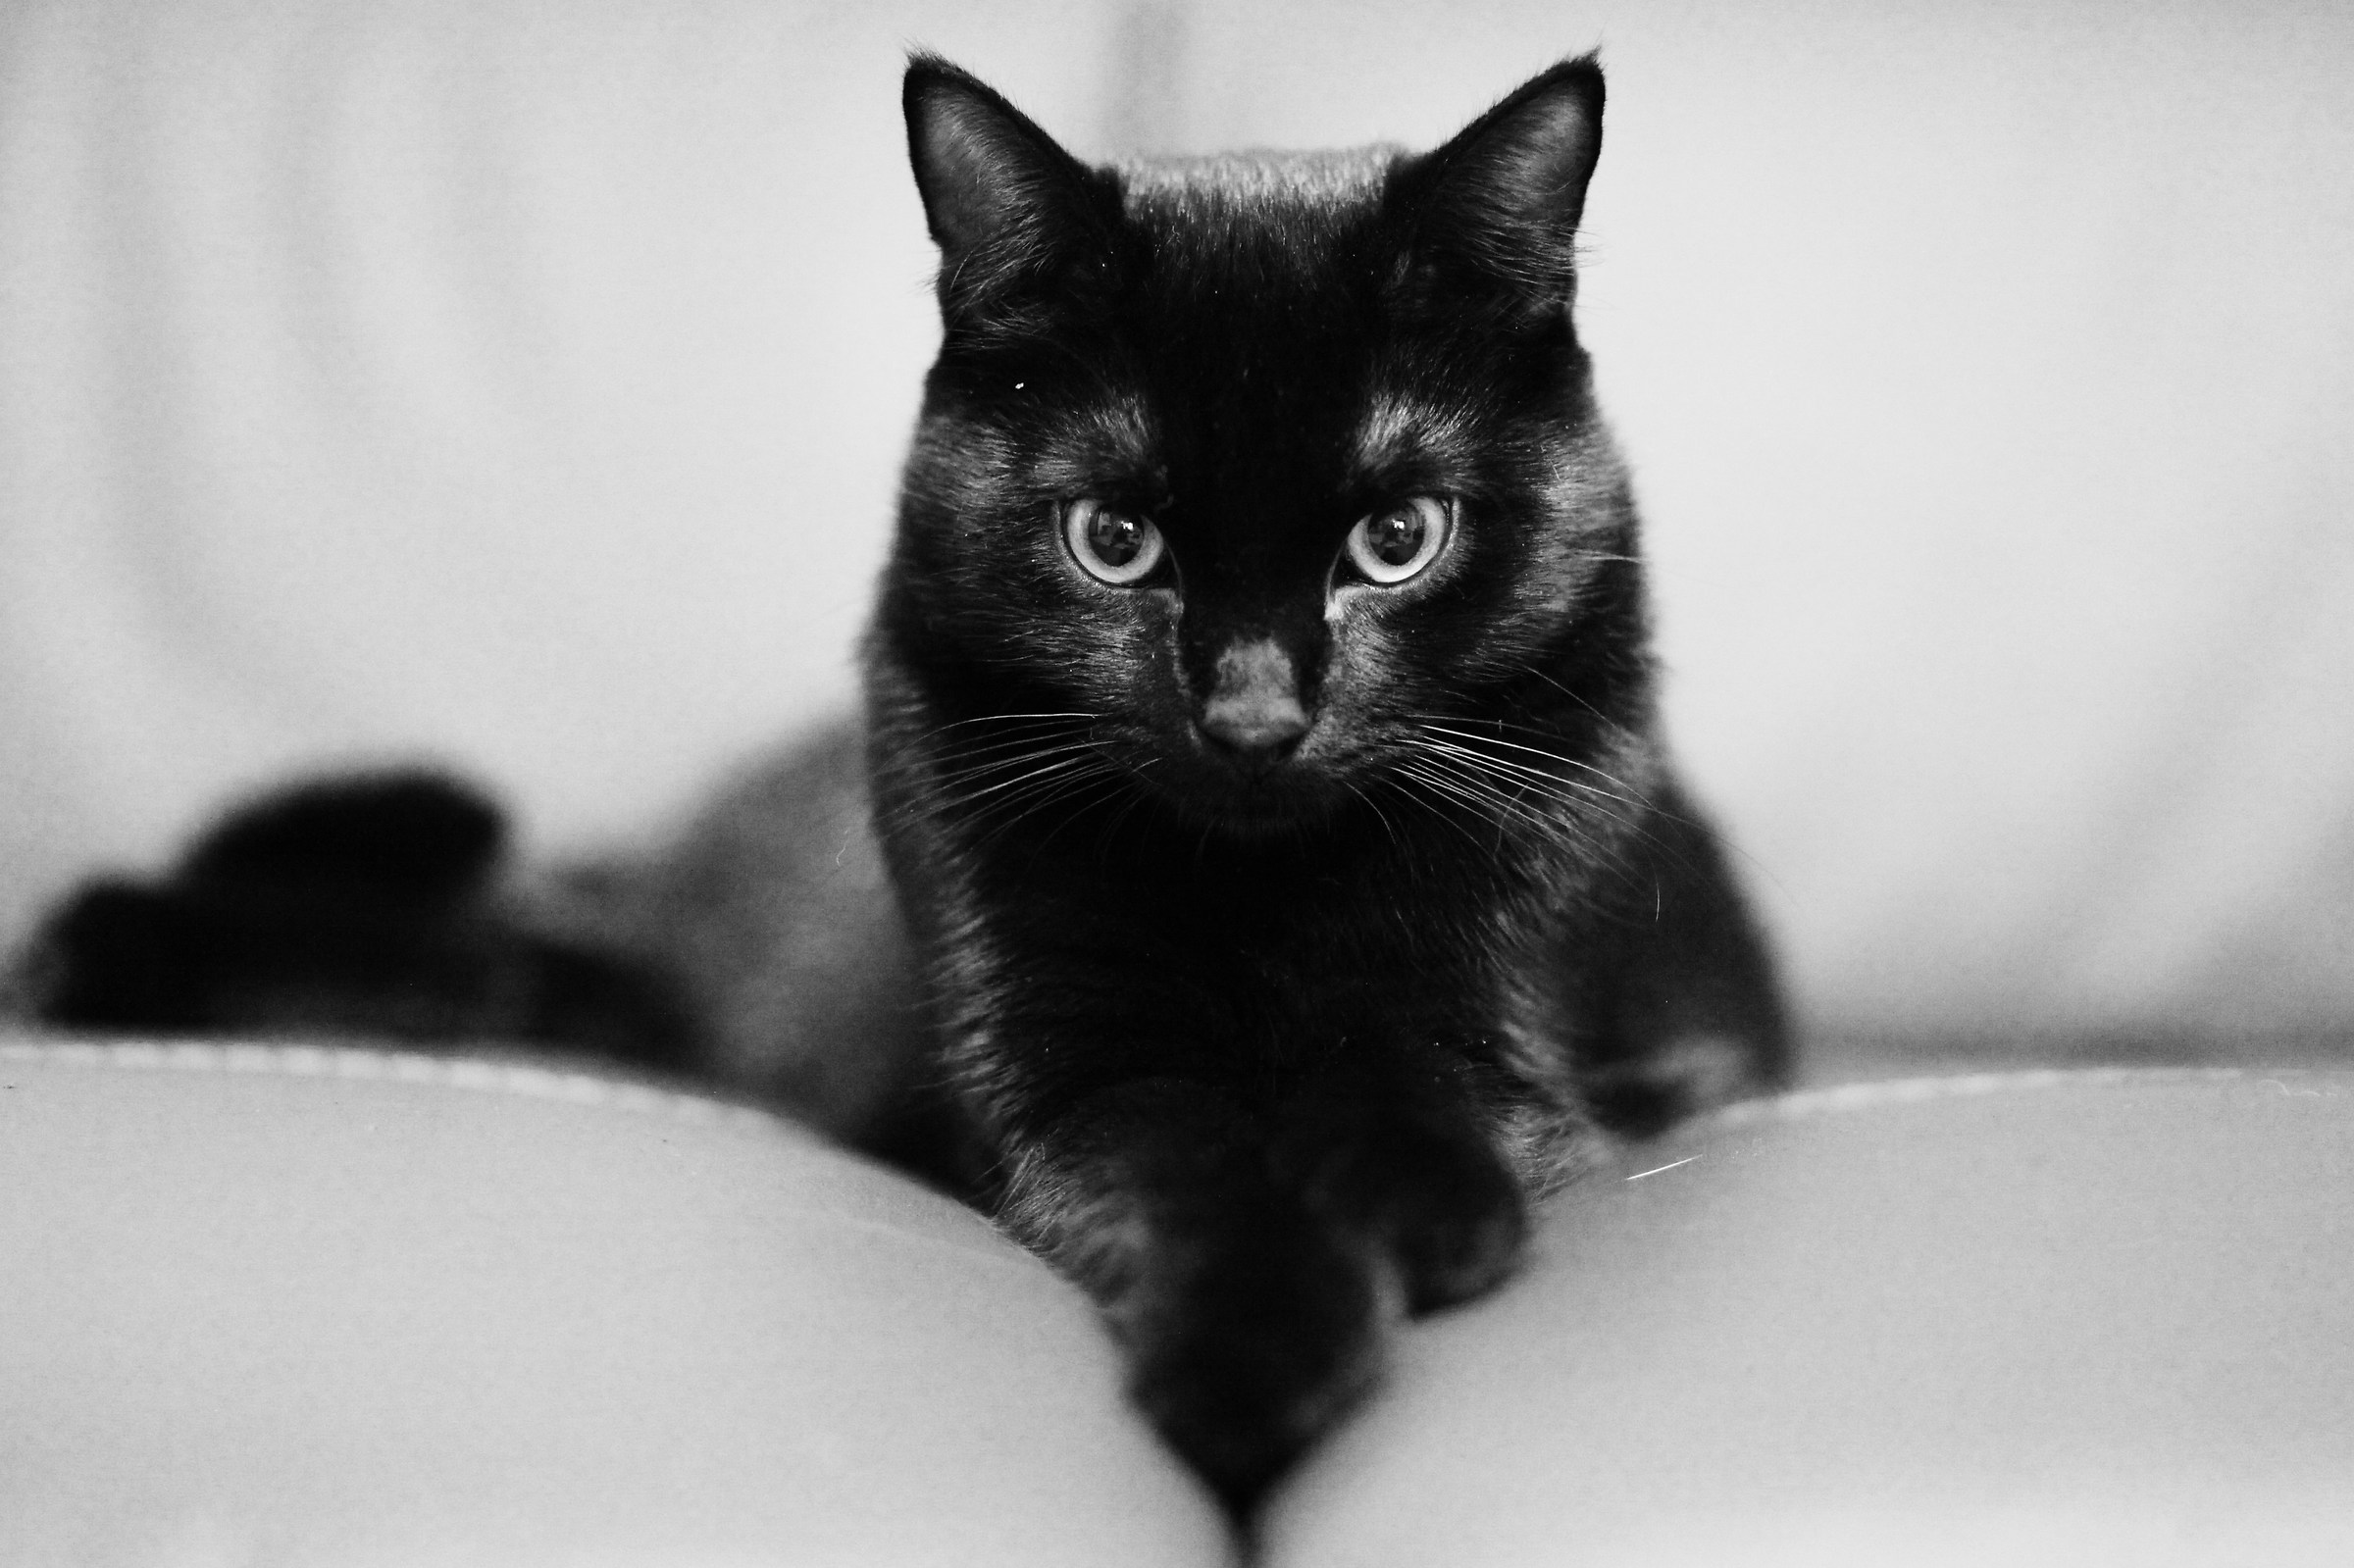 The blackcat...